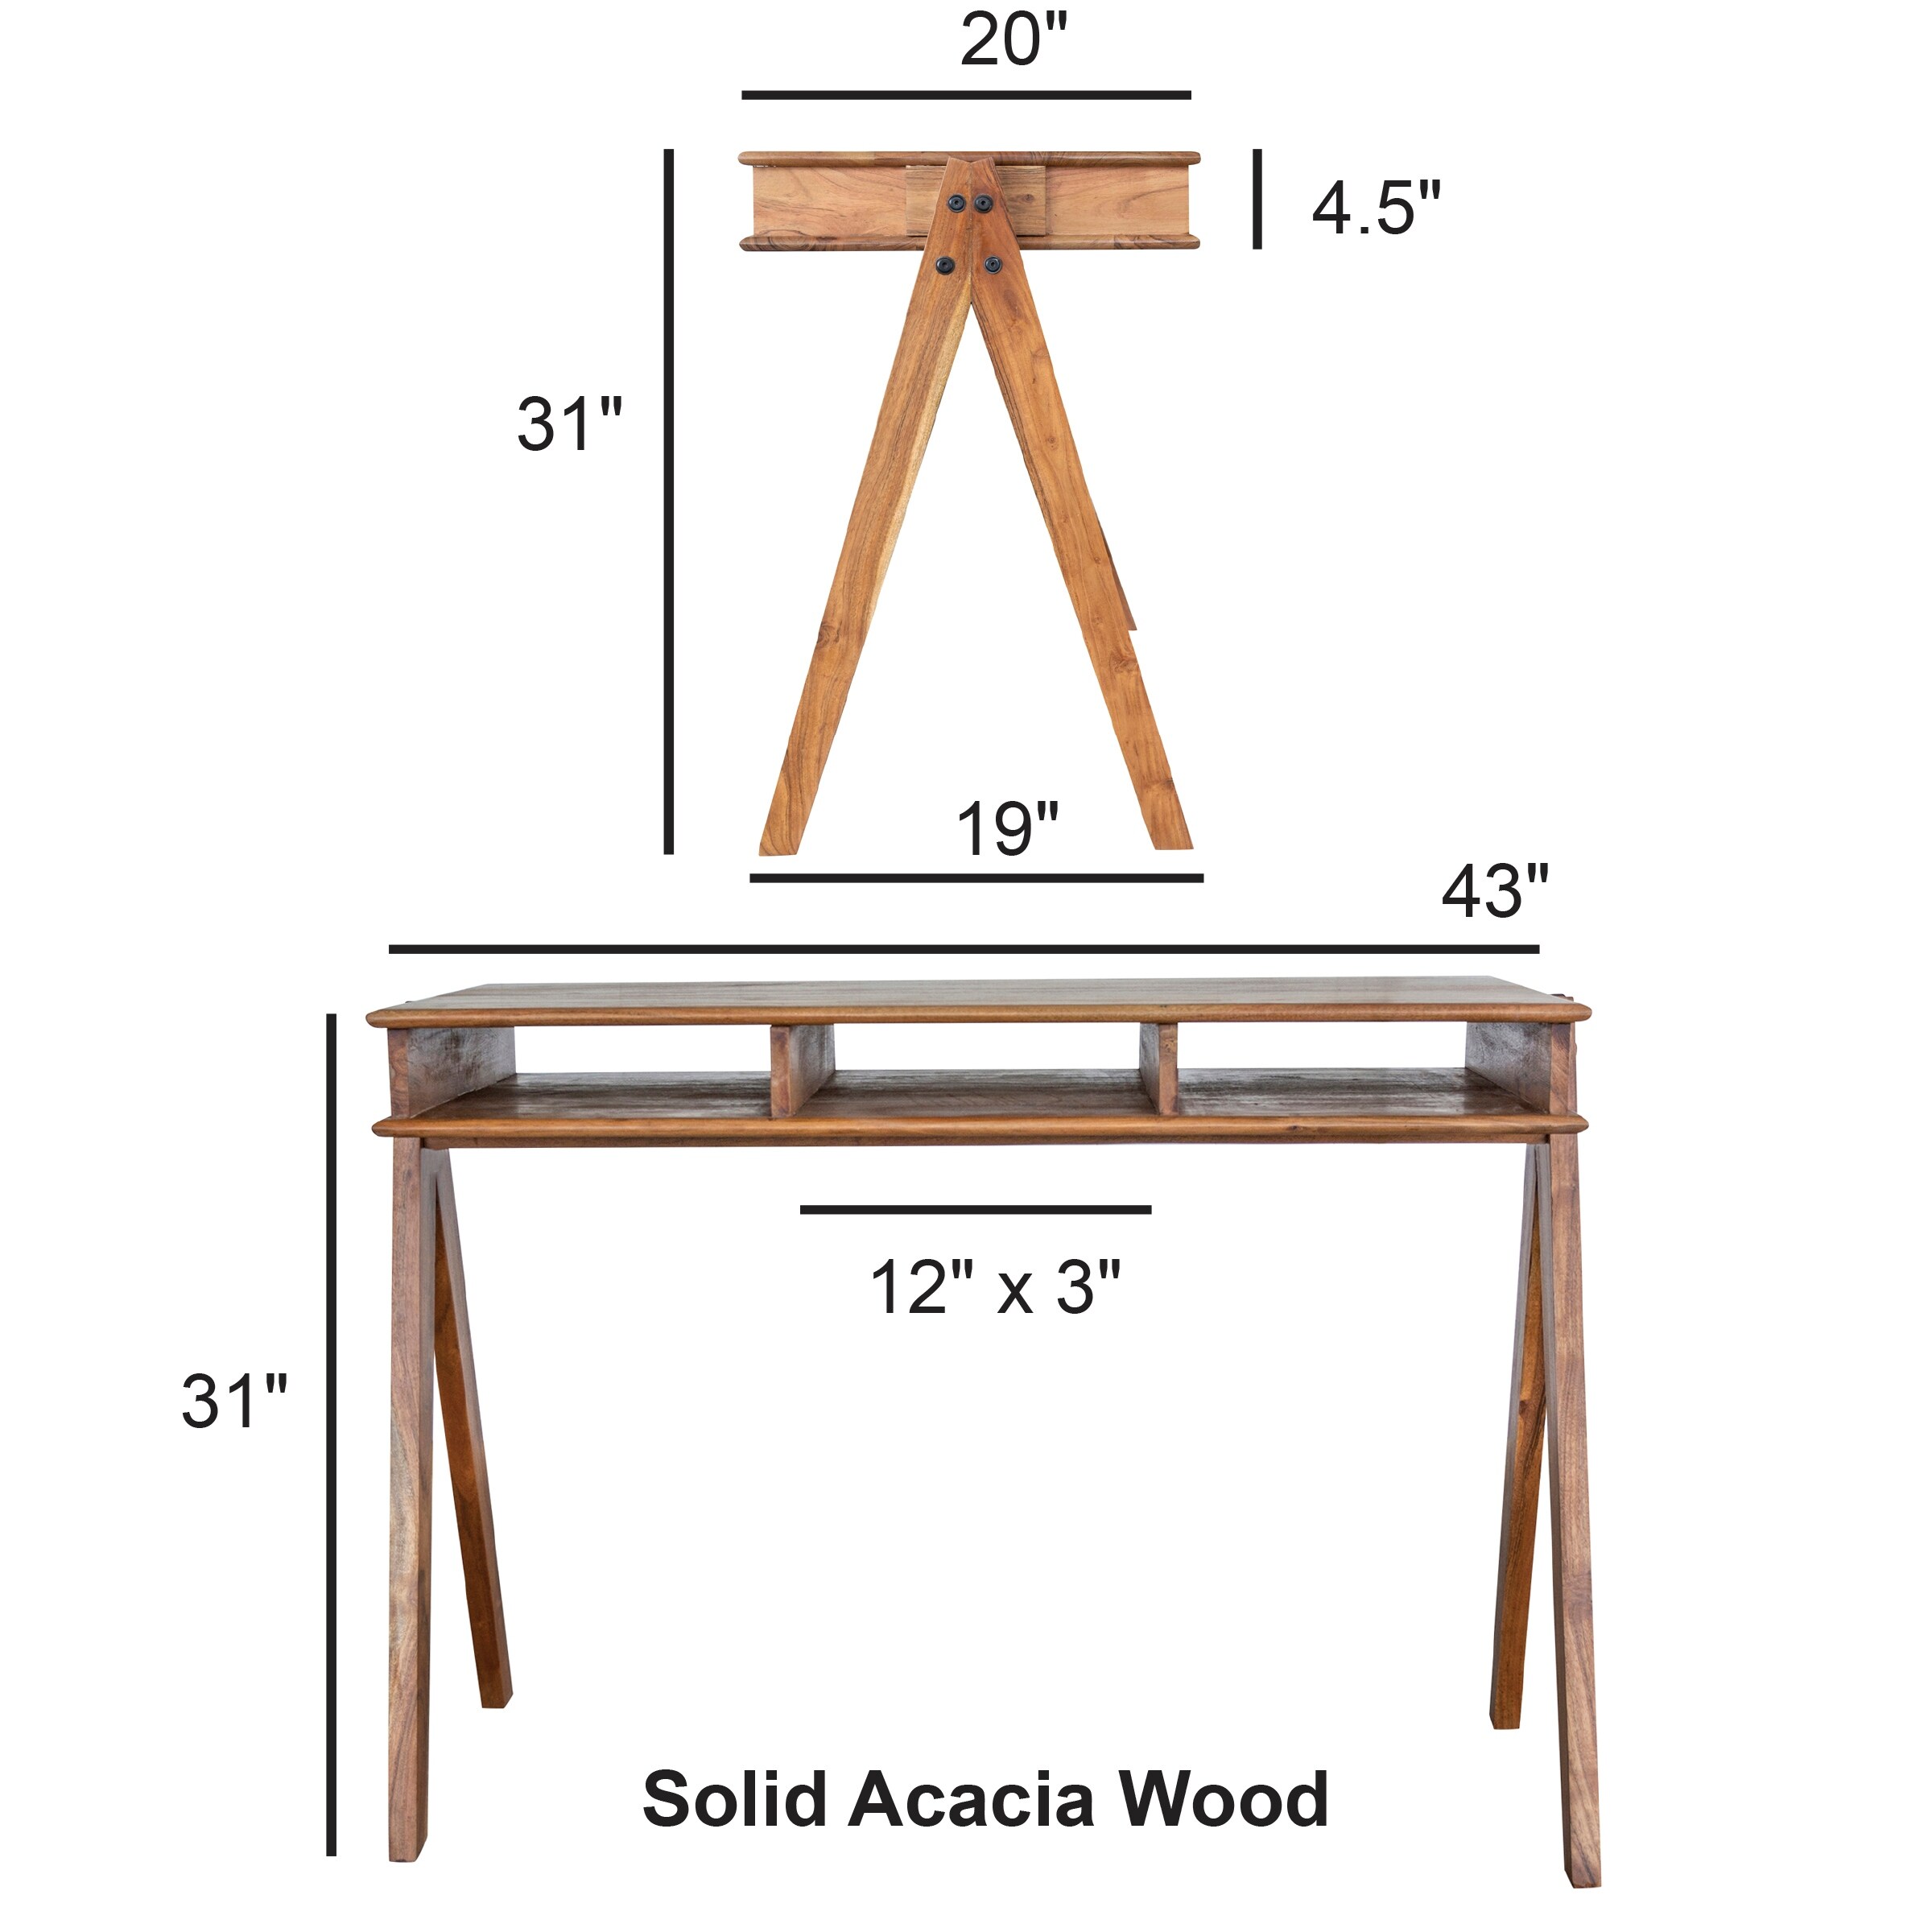 Acacia Wood Desk with Storage Pockets